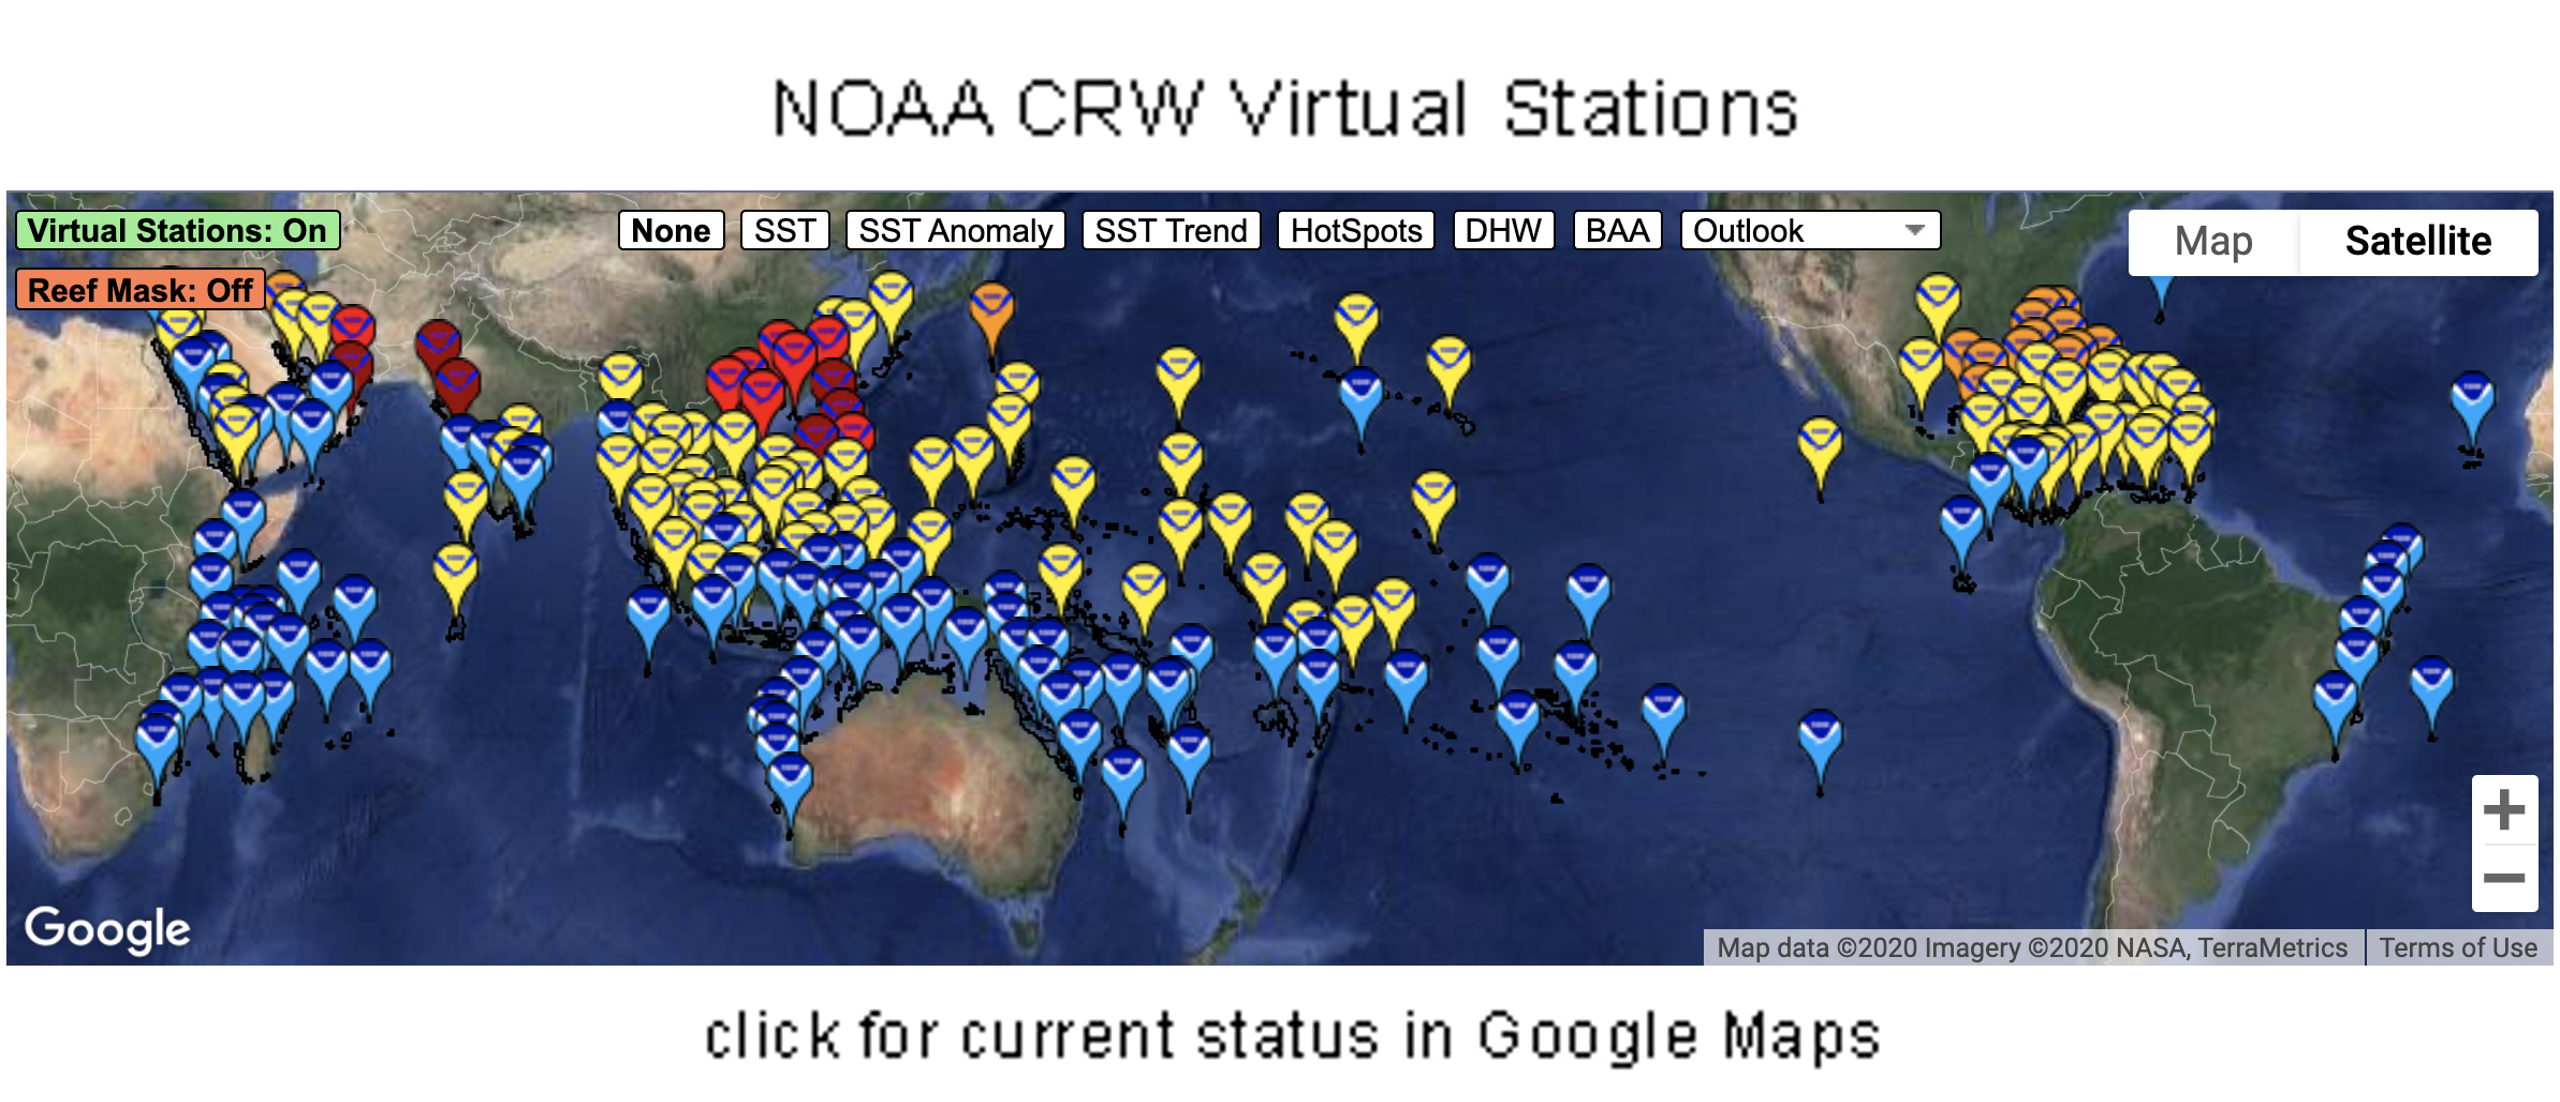 Map of Regional Virtual Stations